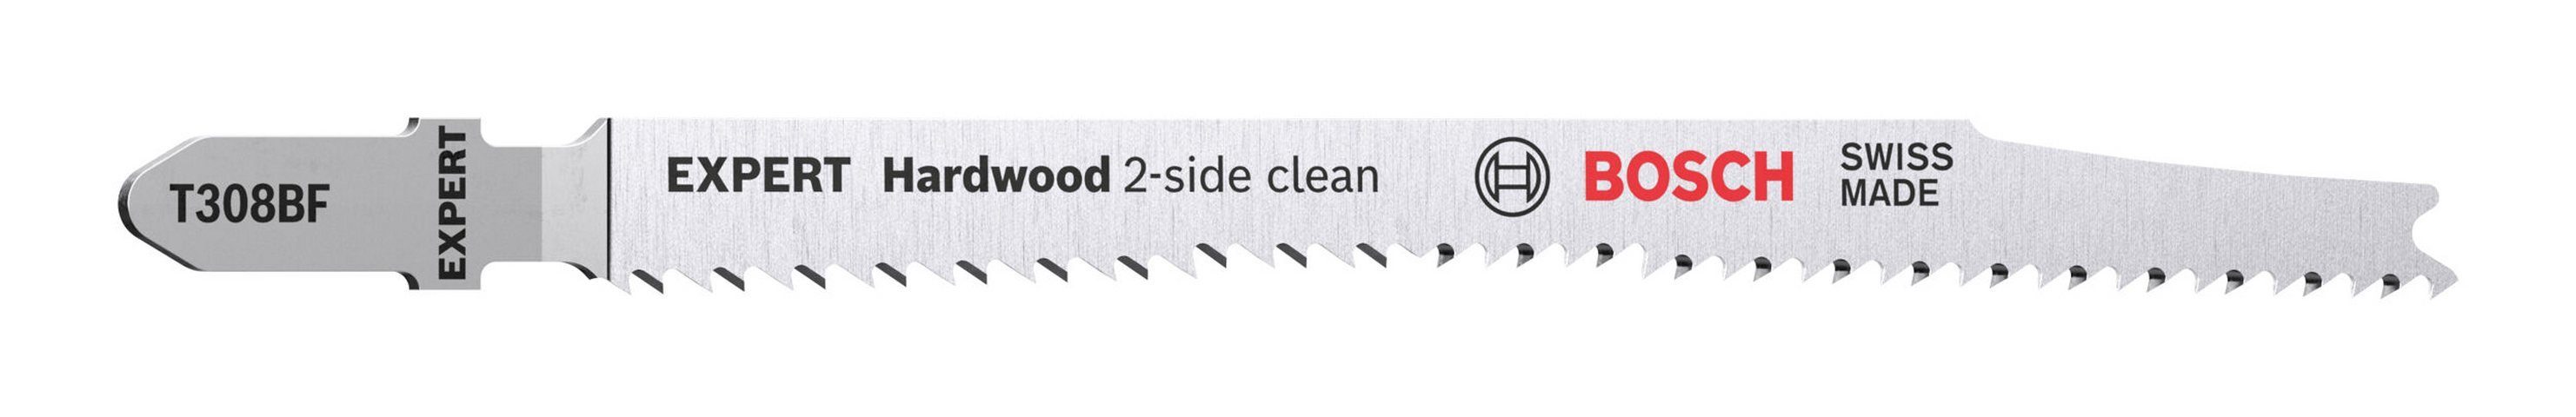 BOSCH Stichsägeblatt Expert Hardwood 2-side (3 Stück), Clean T 308 BF - 3er-Pack